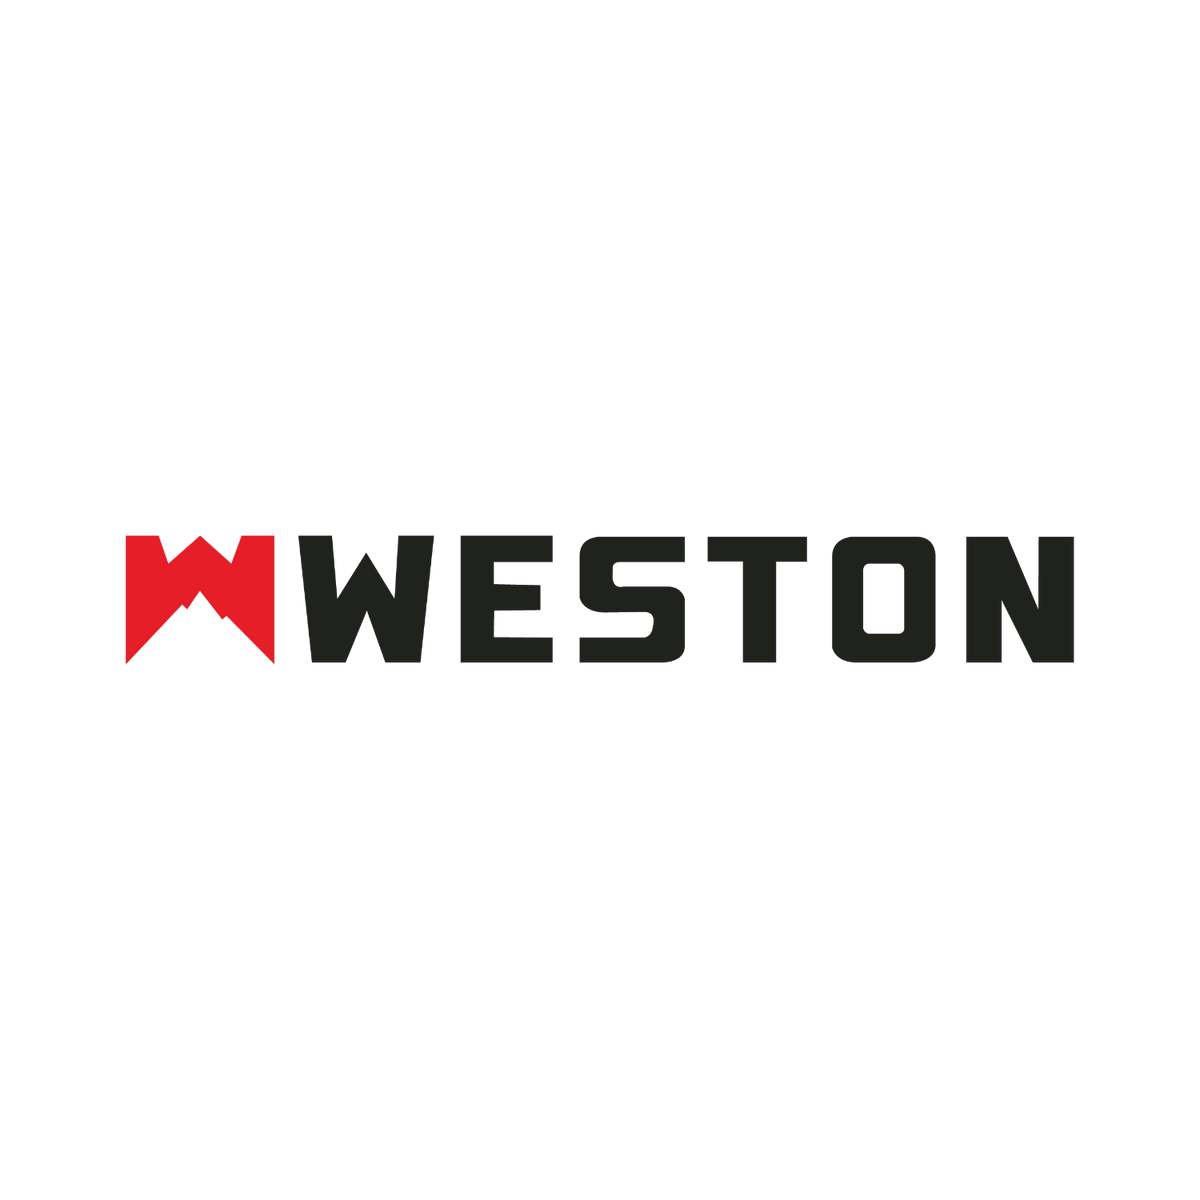 Weston-transparent-logo